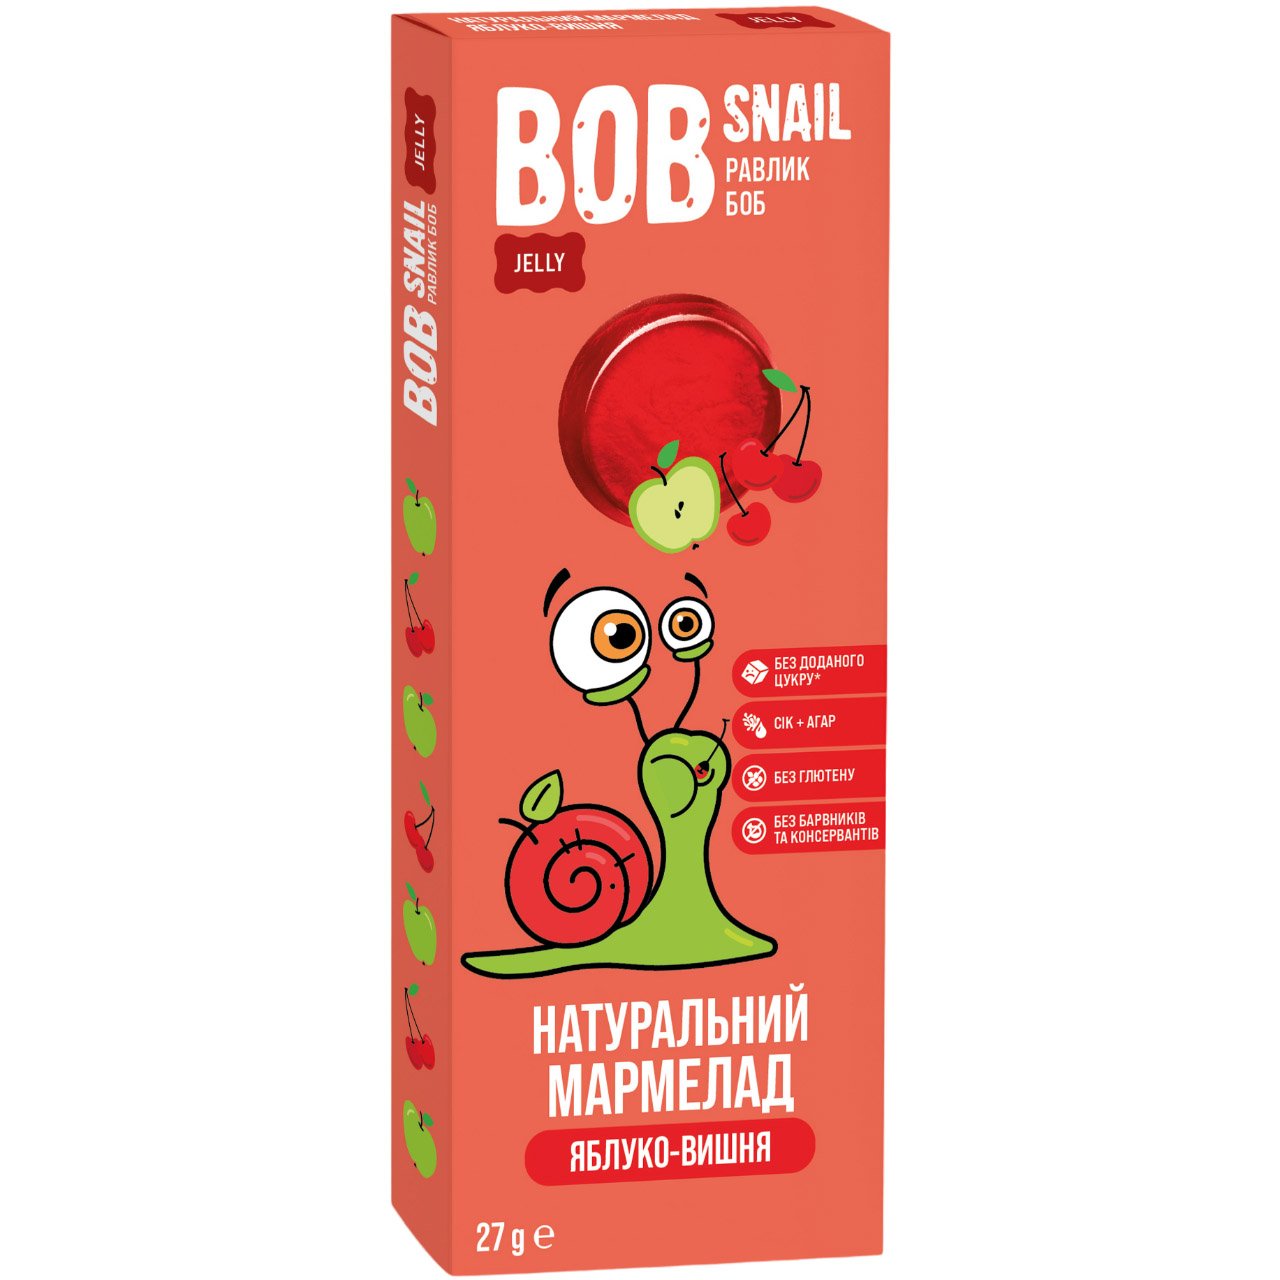 Натуральный мармелад Bob Snail Яблоко-Вишня 27 г - фото 1